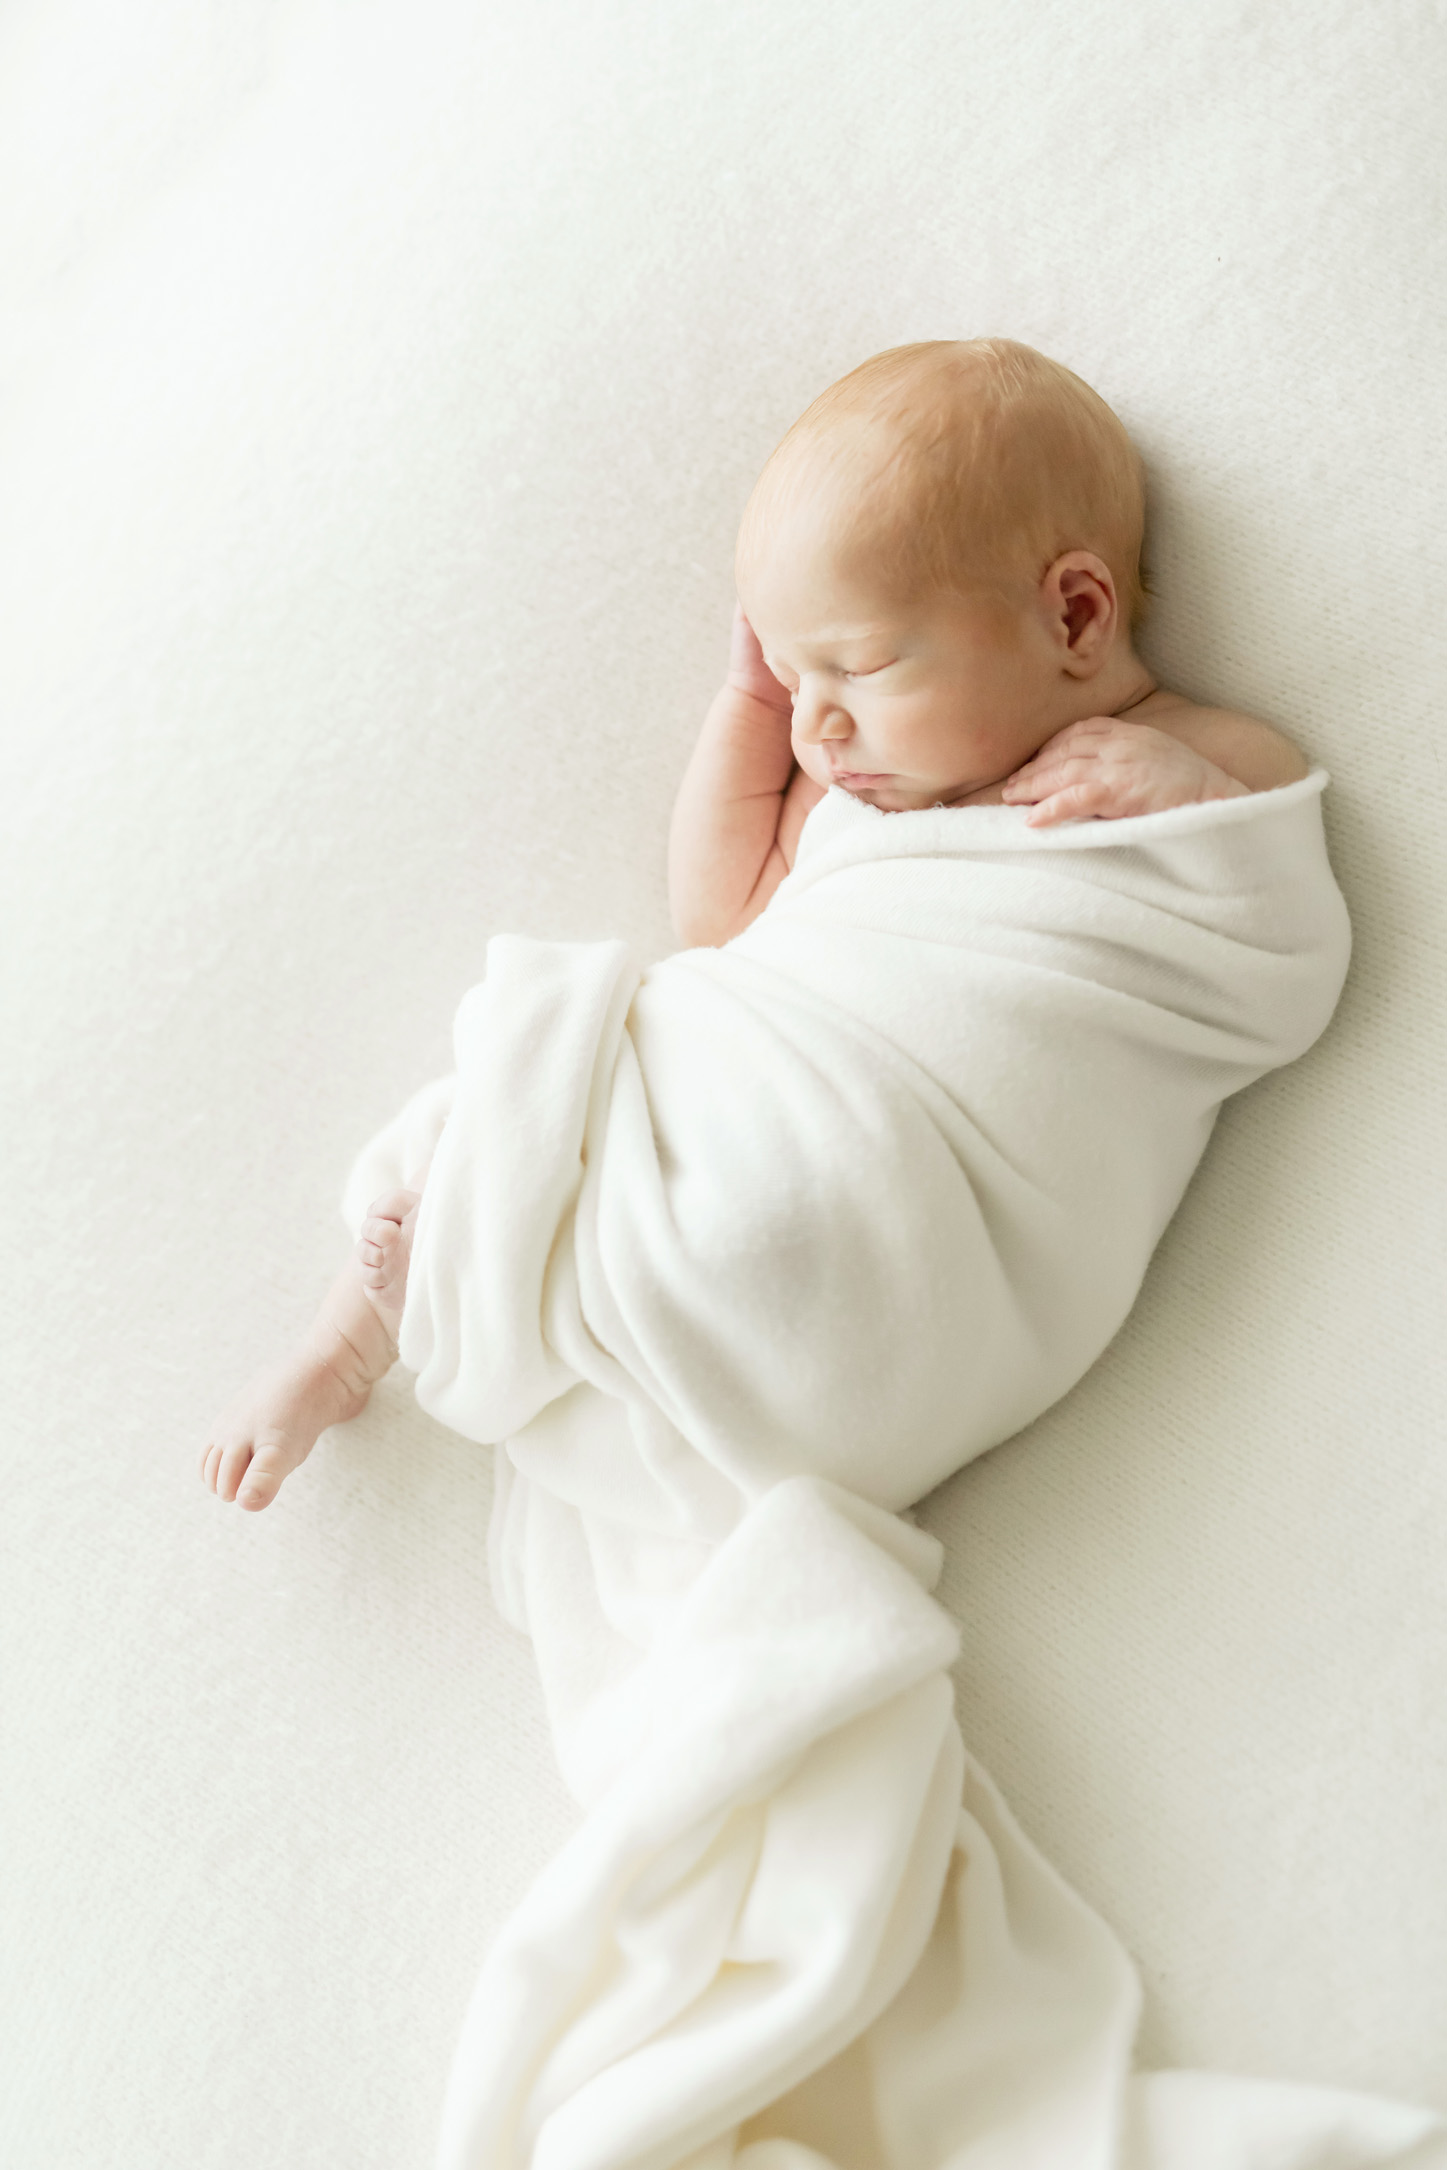 baby swaddled in white blanket